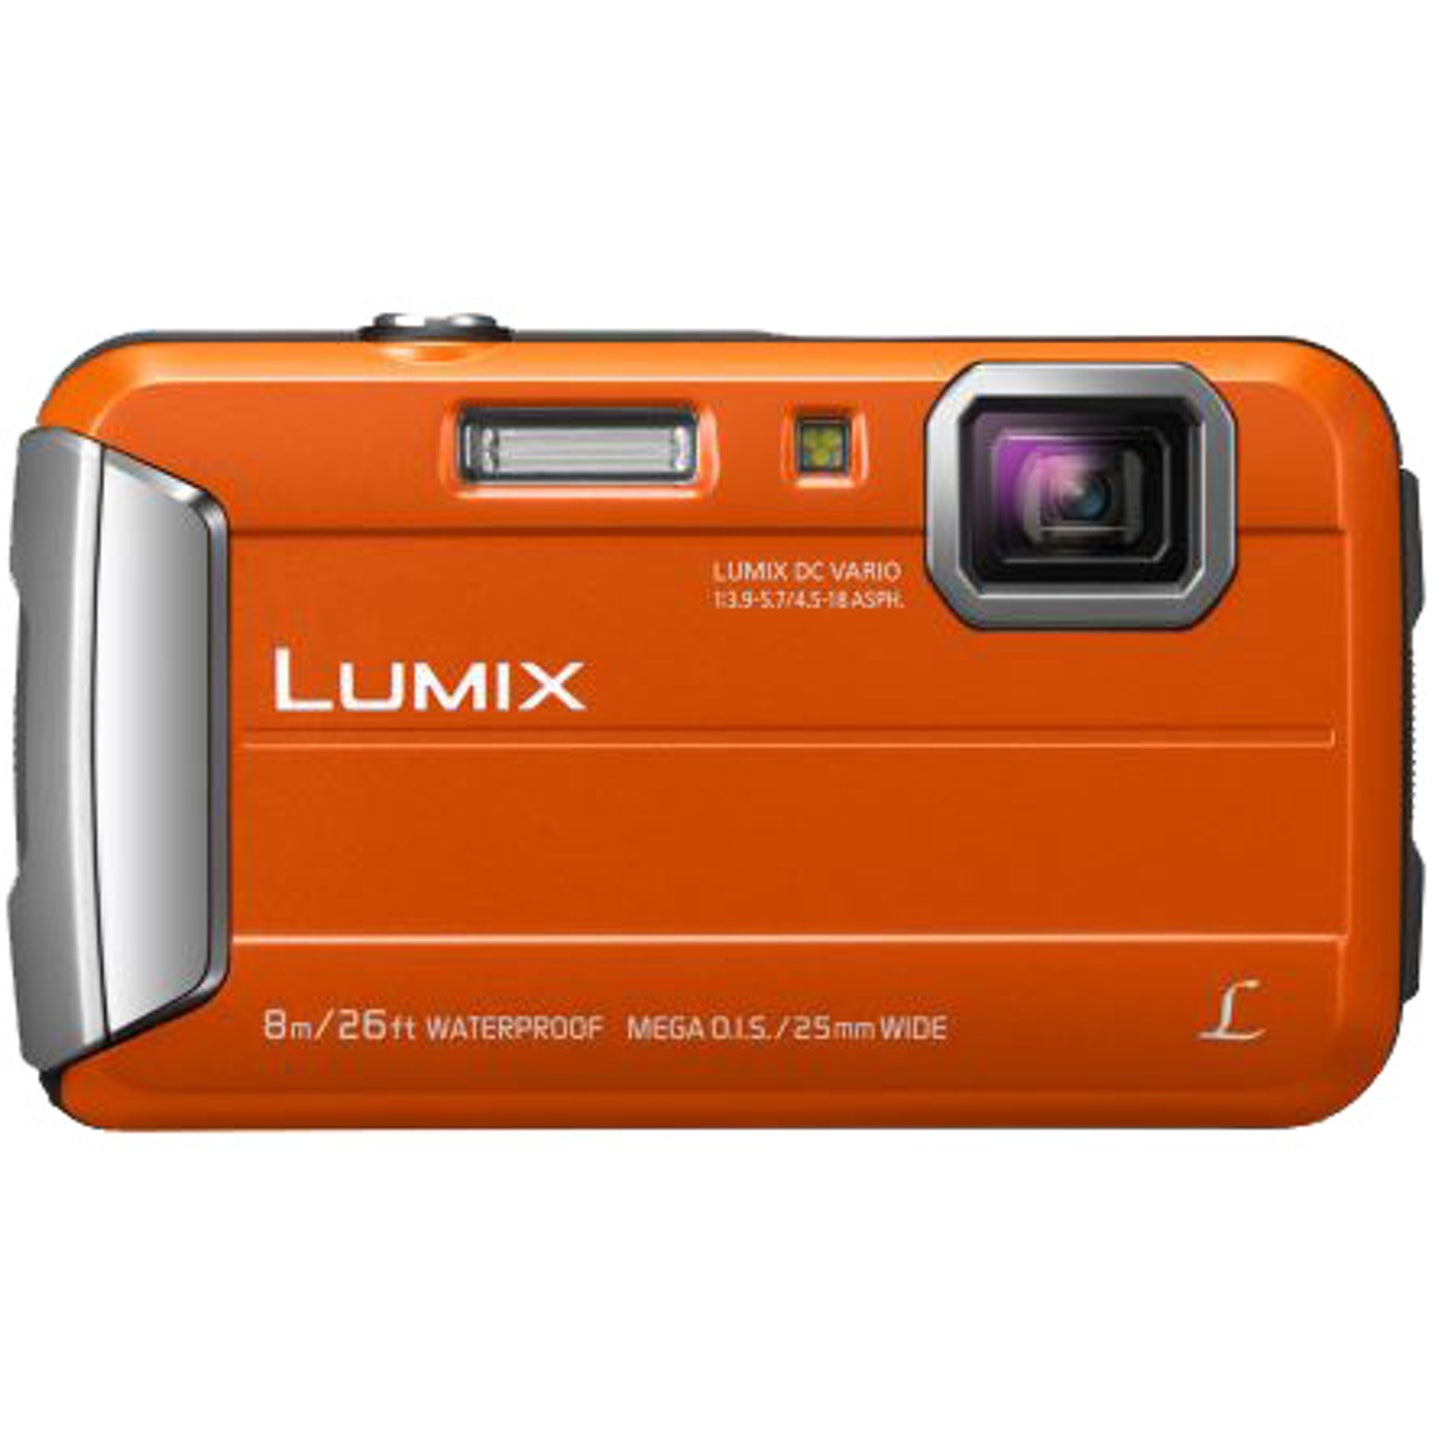 Panasonic Lumix DMC-TS30 Digital Waterproof Camera 4x Optical Zoom 25-100mm DC Vario Lens